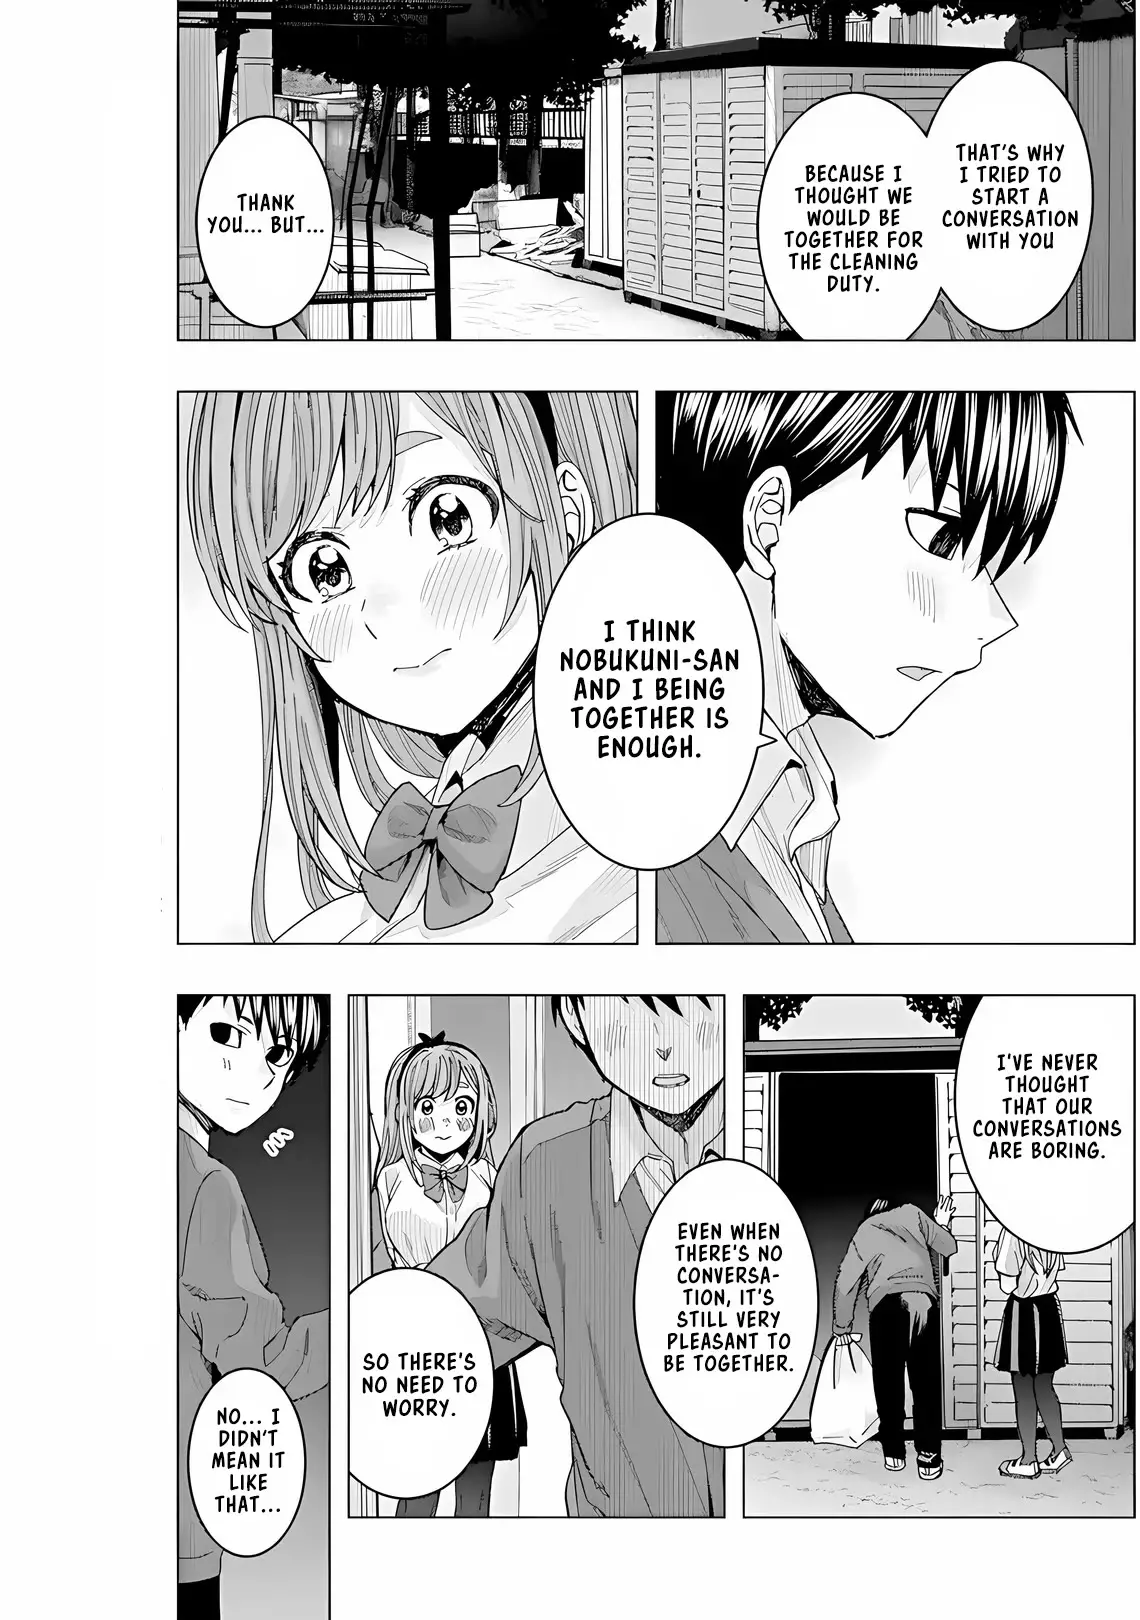 "nobukuni-San" Does She Like Me? - 27 page 14-72697975